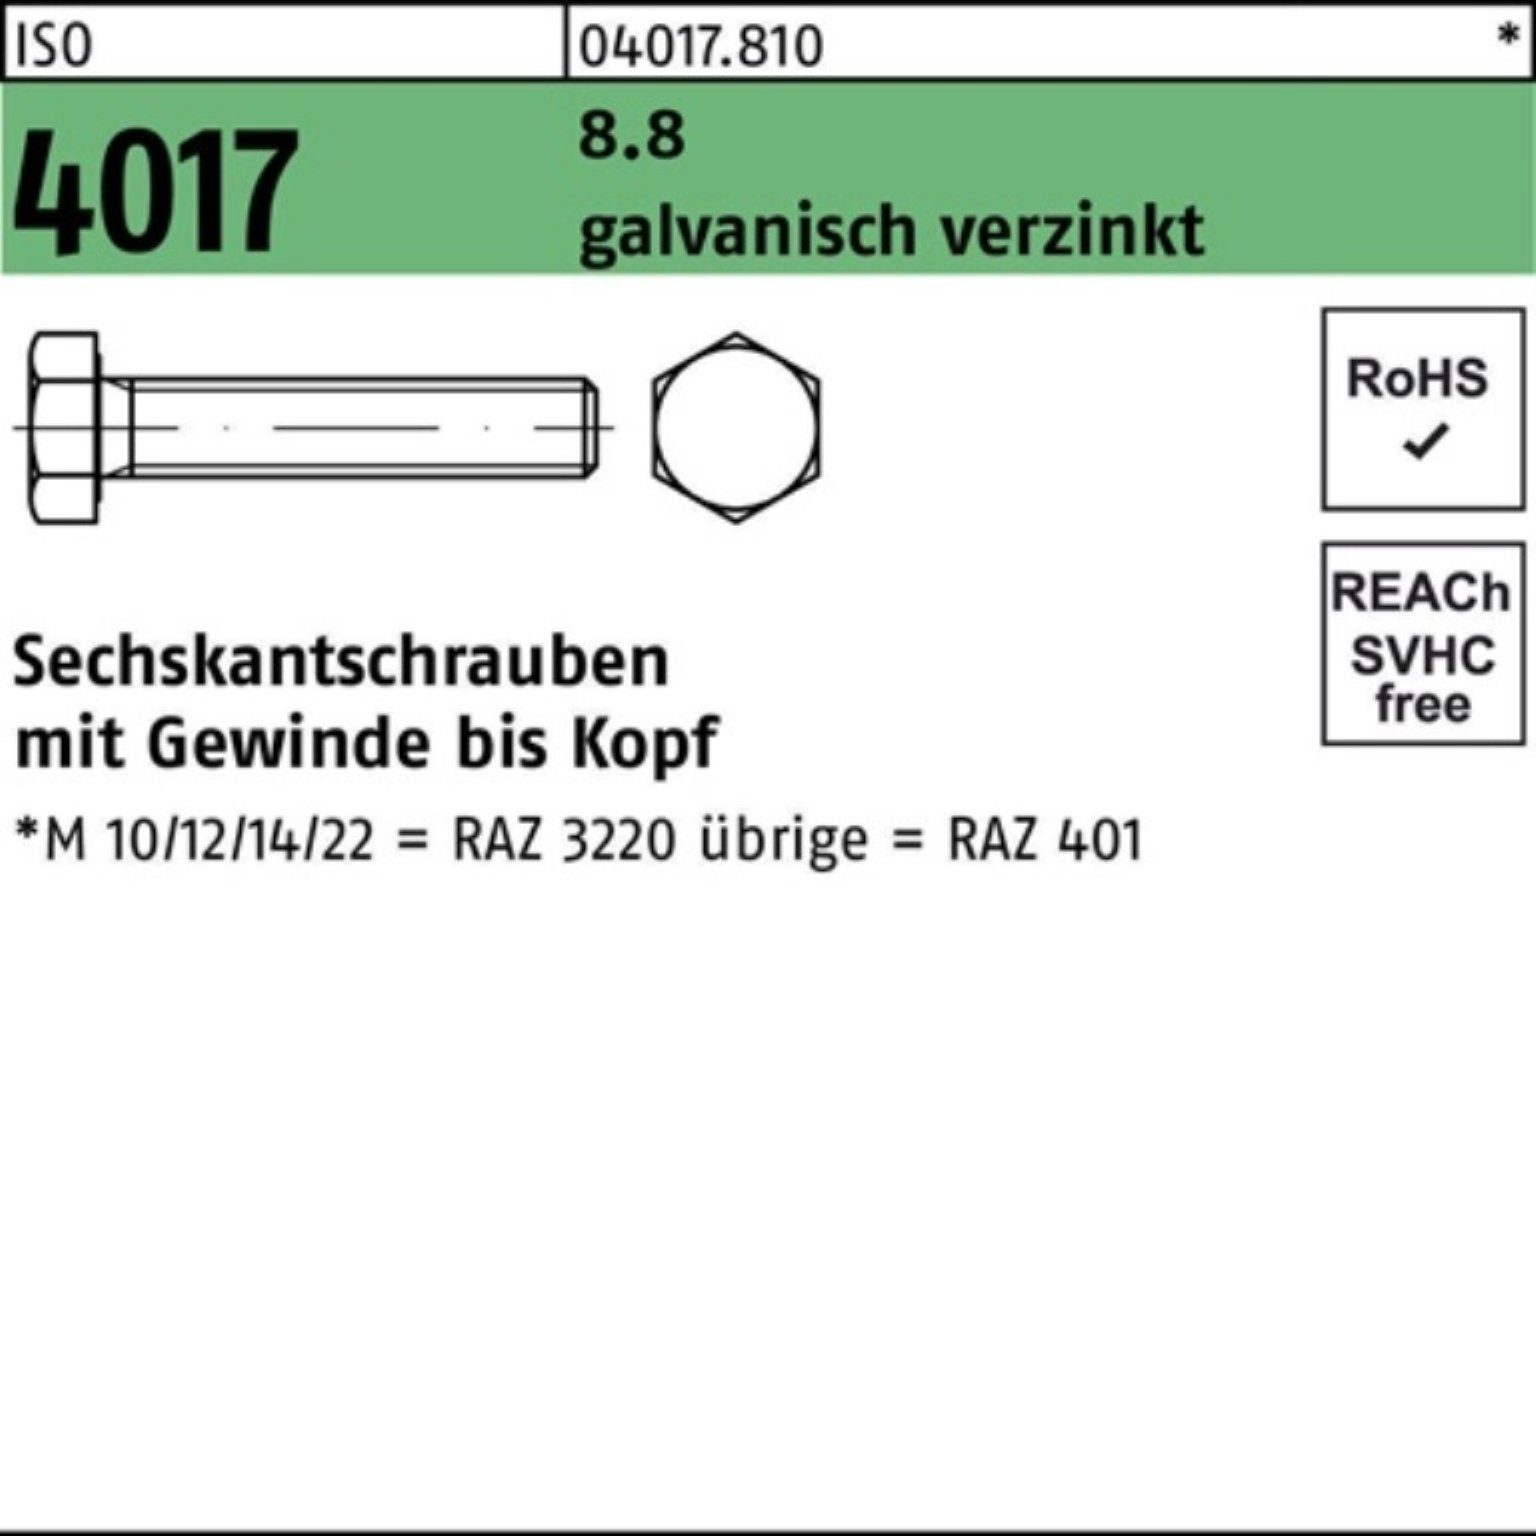 VG Pack ISO Sechskantschraube M27x galv.verz. 8.8 4017 140 100er 1 Bufab Sechskantschraube St